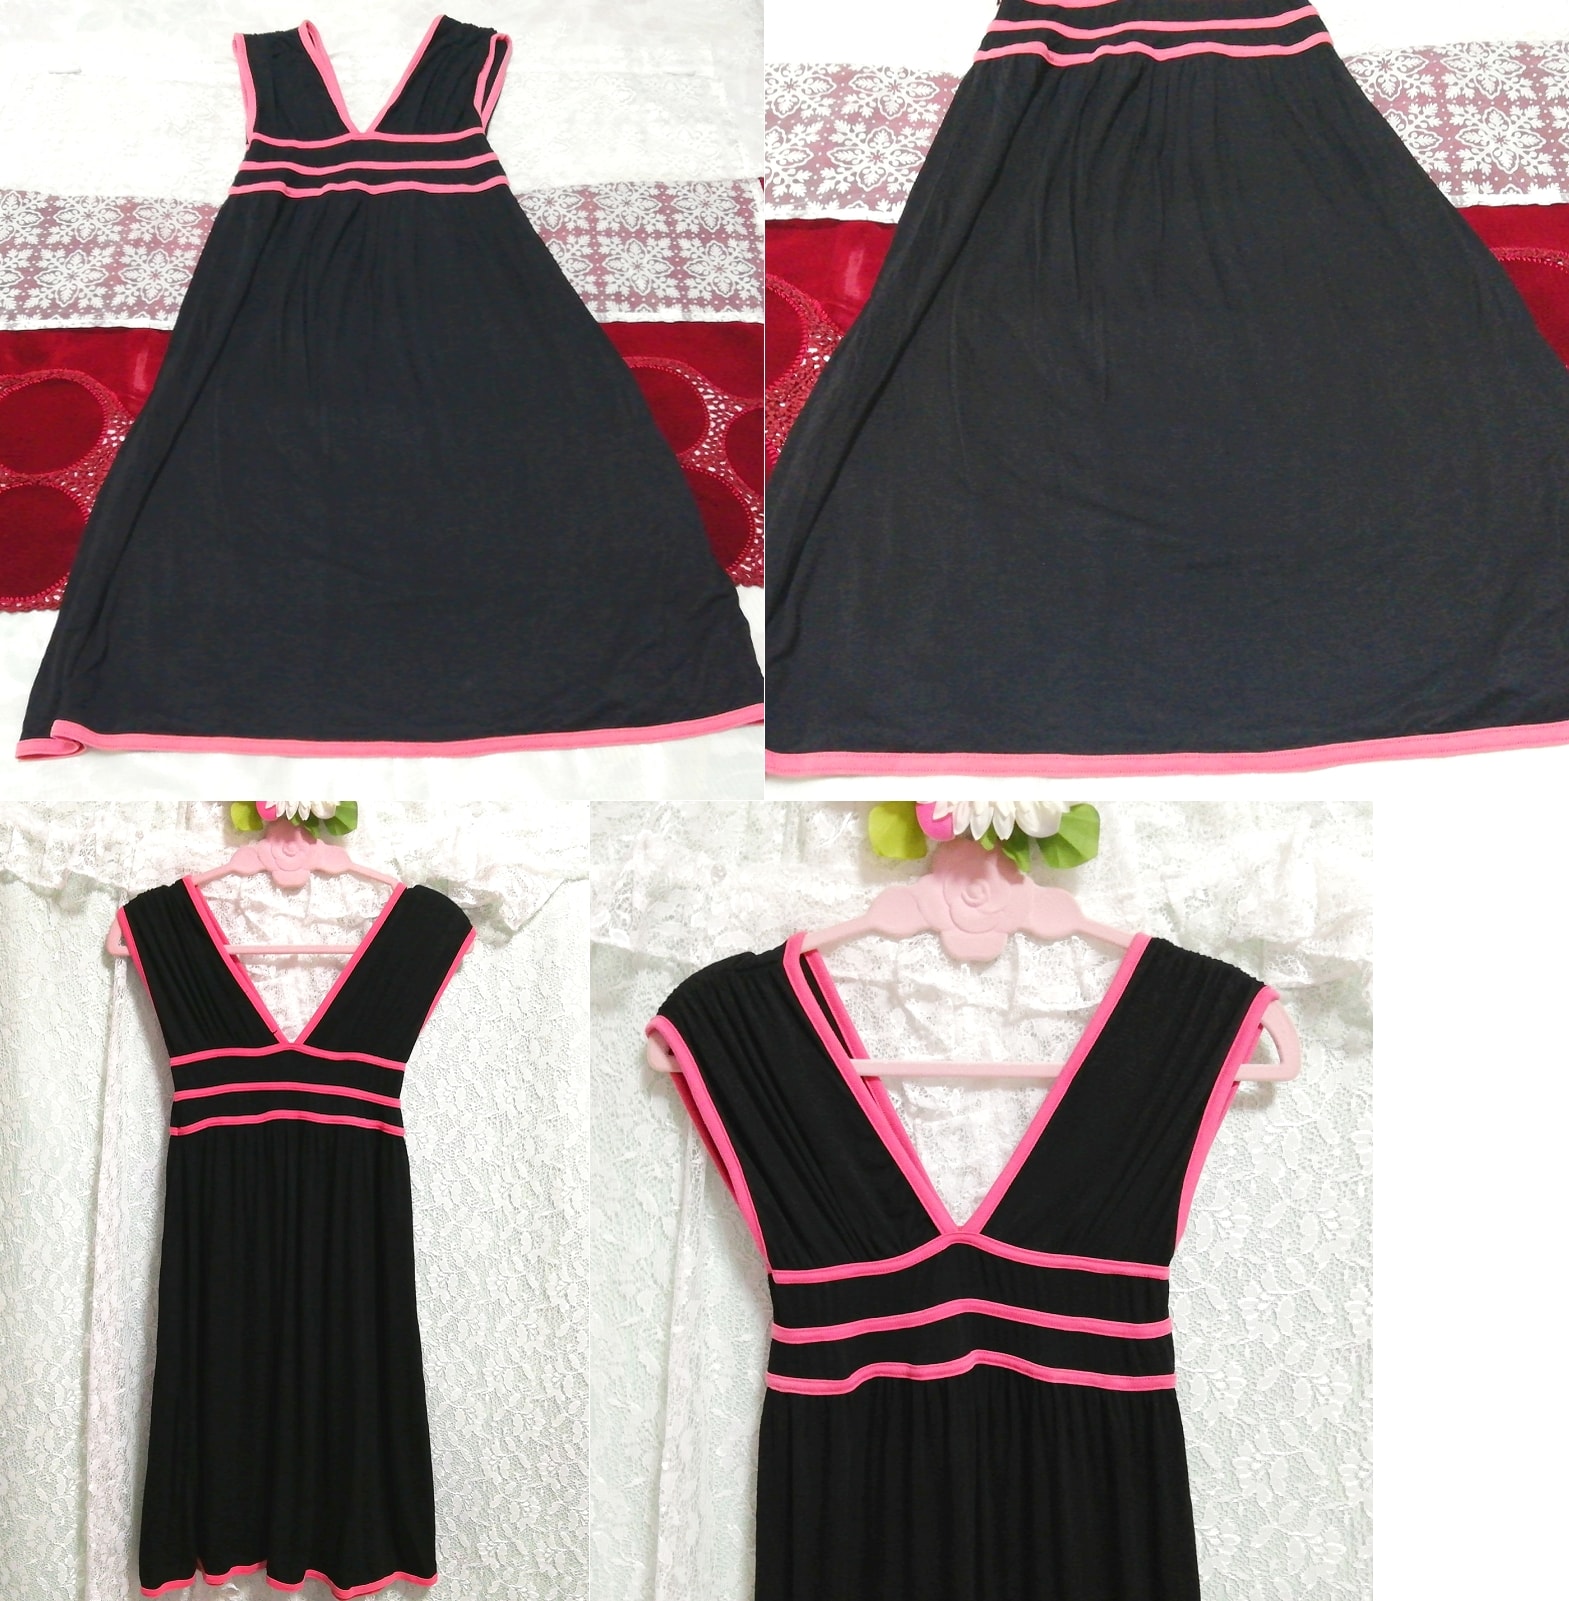 Black pink sleeveless negligee nightgown nightwear half dress, knee length skirt, m size